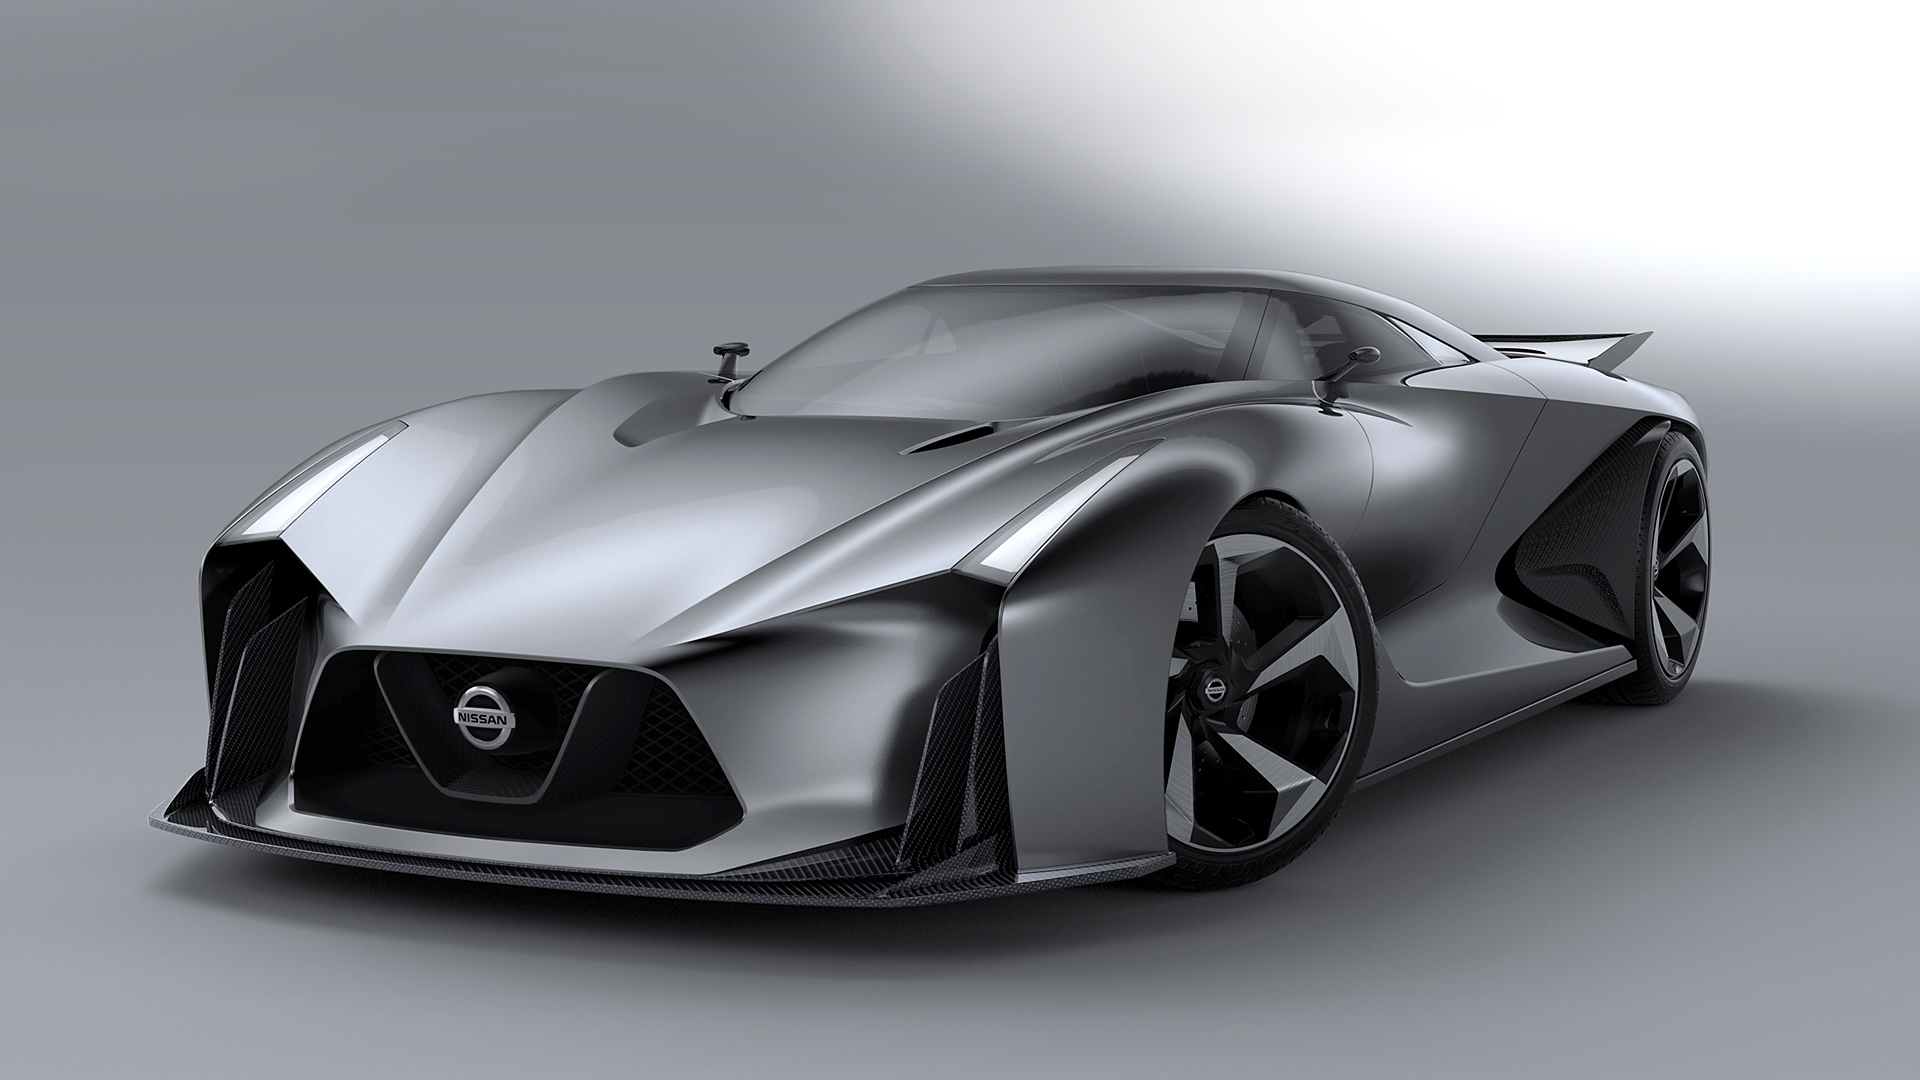  2014 Nissan 2020 Vision Gran Turismo Concept Wallpaper.